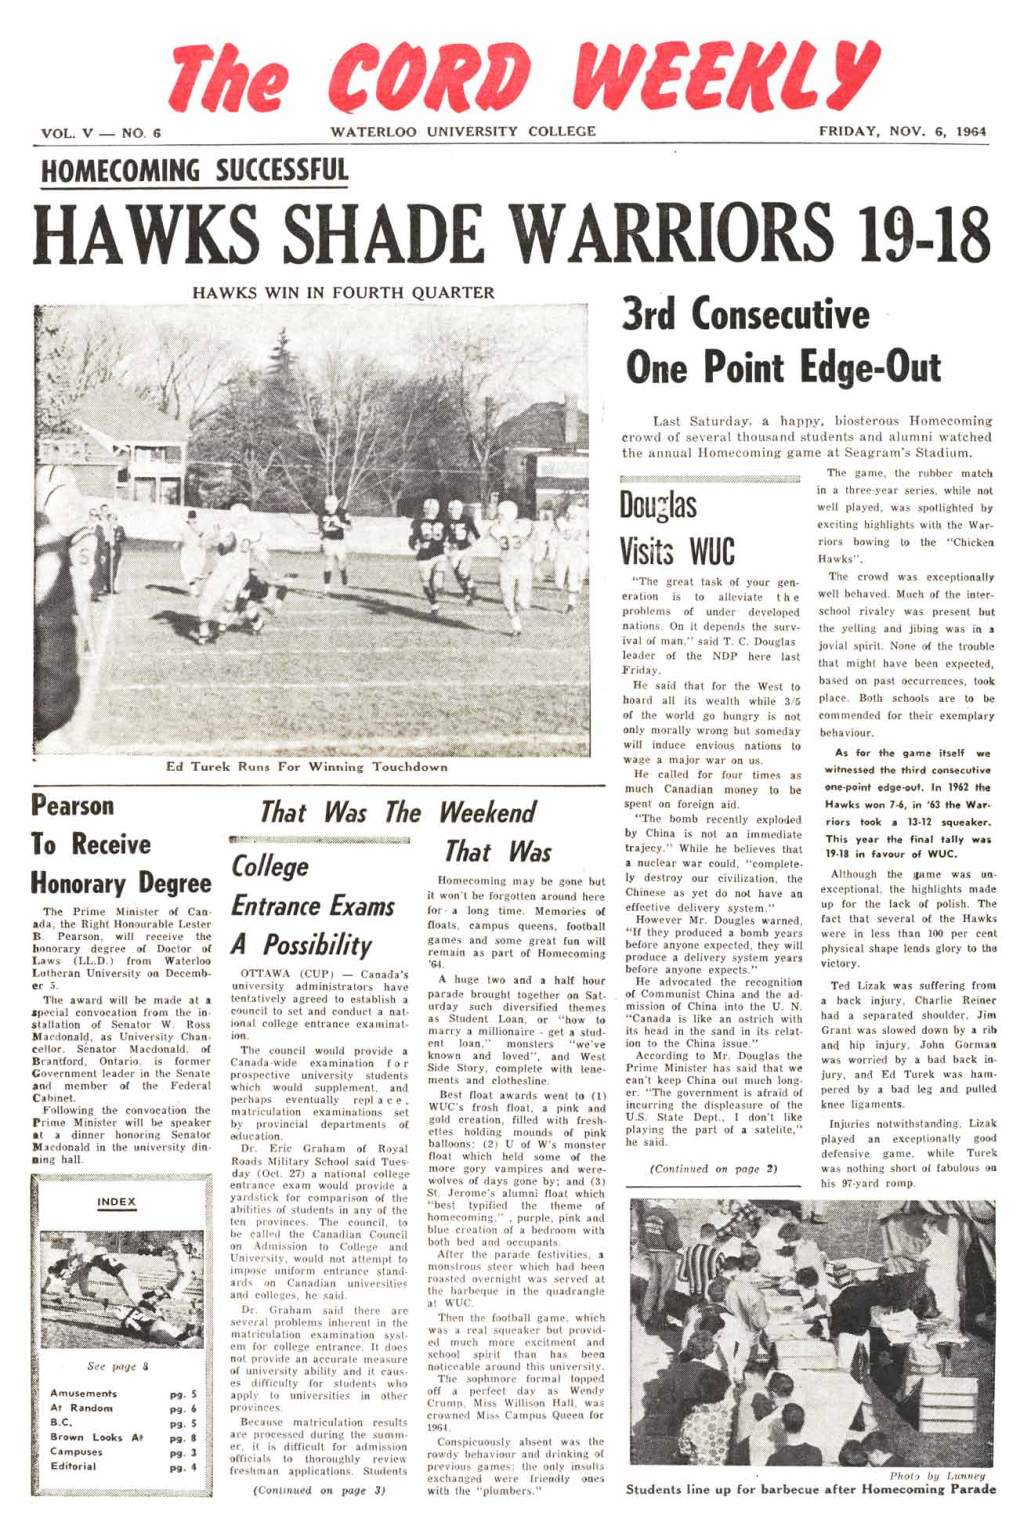 The Cord Weekly (November 6, 1964)